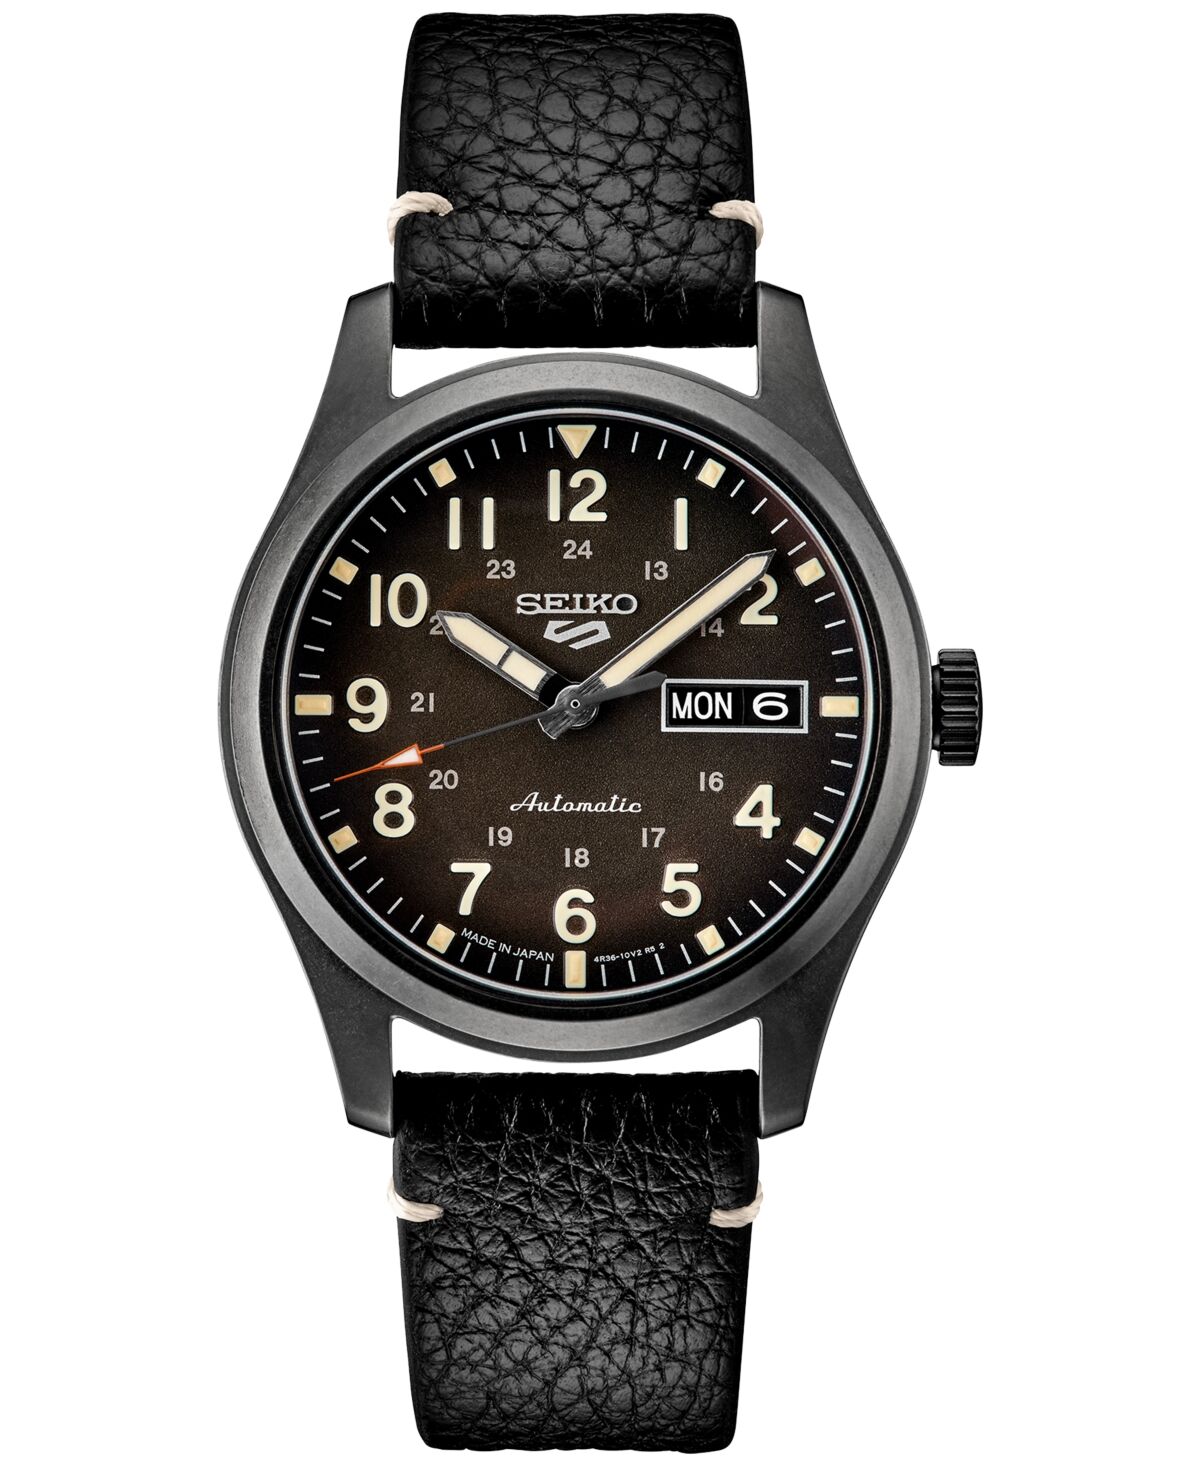 Seiko Men's Automatic 5 Sports Black Leather Strap Watch 43mm - Black